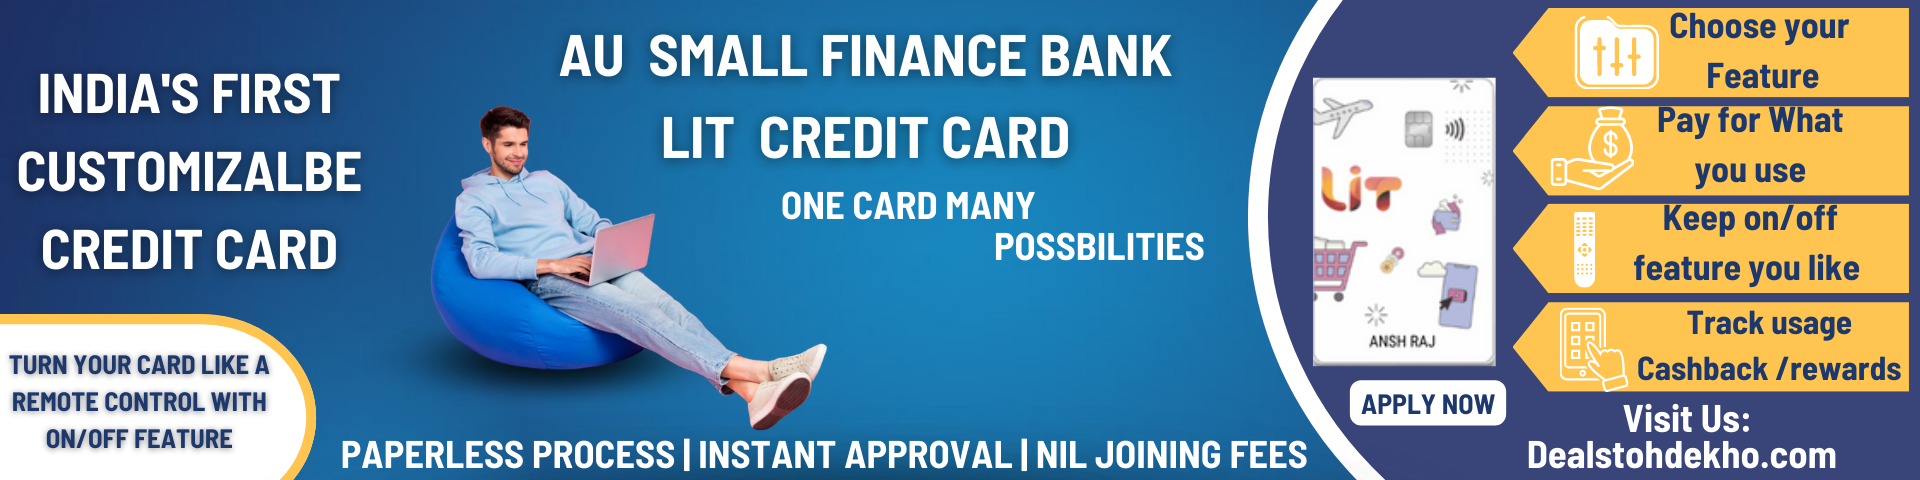 get instant online approval for Au bank credit card